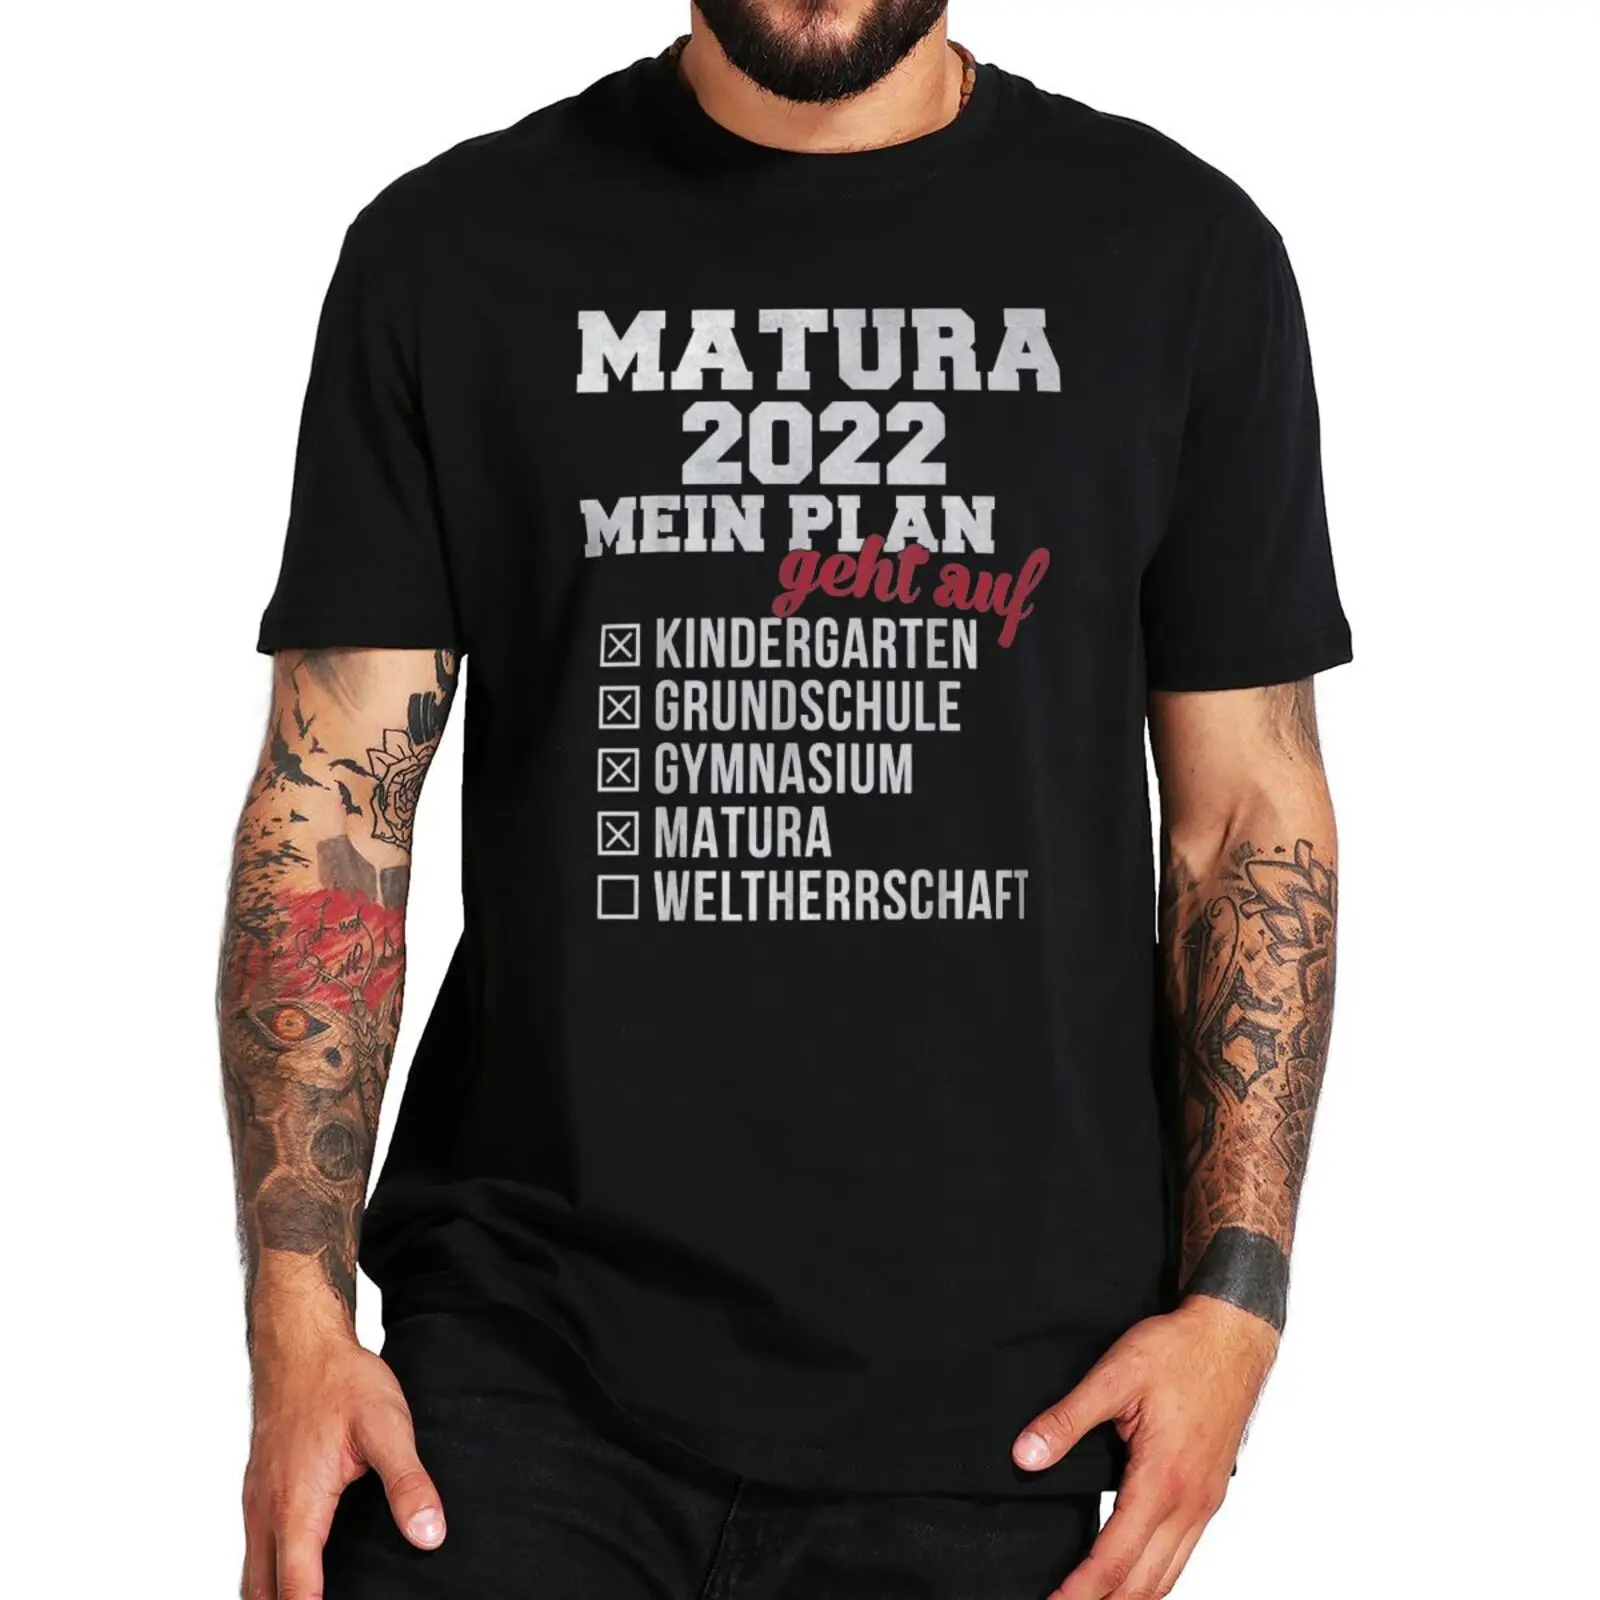 

Matura 2022 T Shirt Funny Students Graduation Sayings Hipster Short Sleeve Gifts EU Size 100% Cotton Summer Casual T-shirt